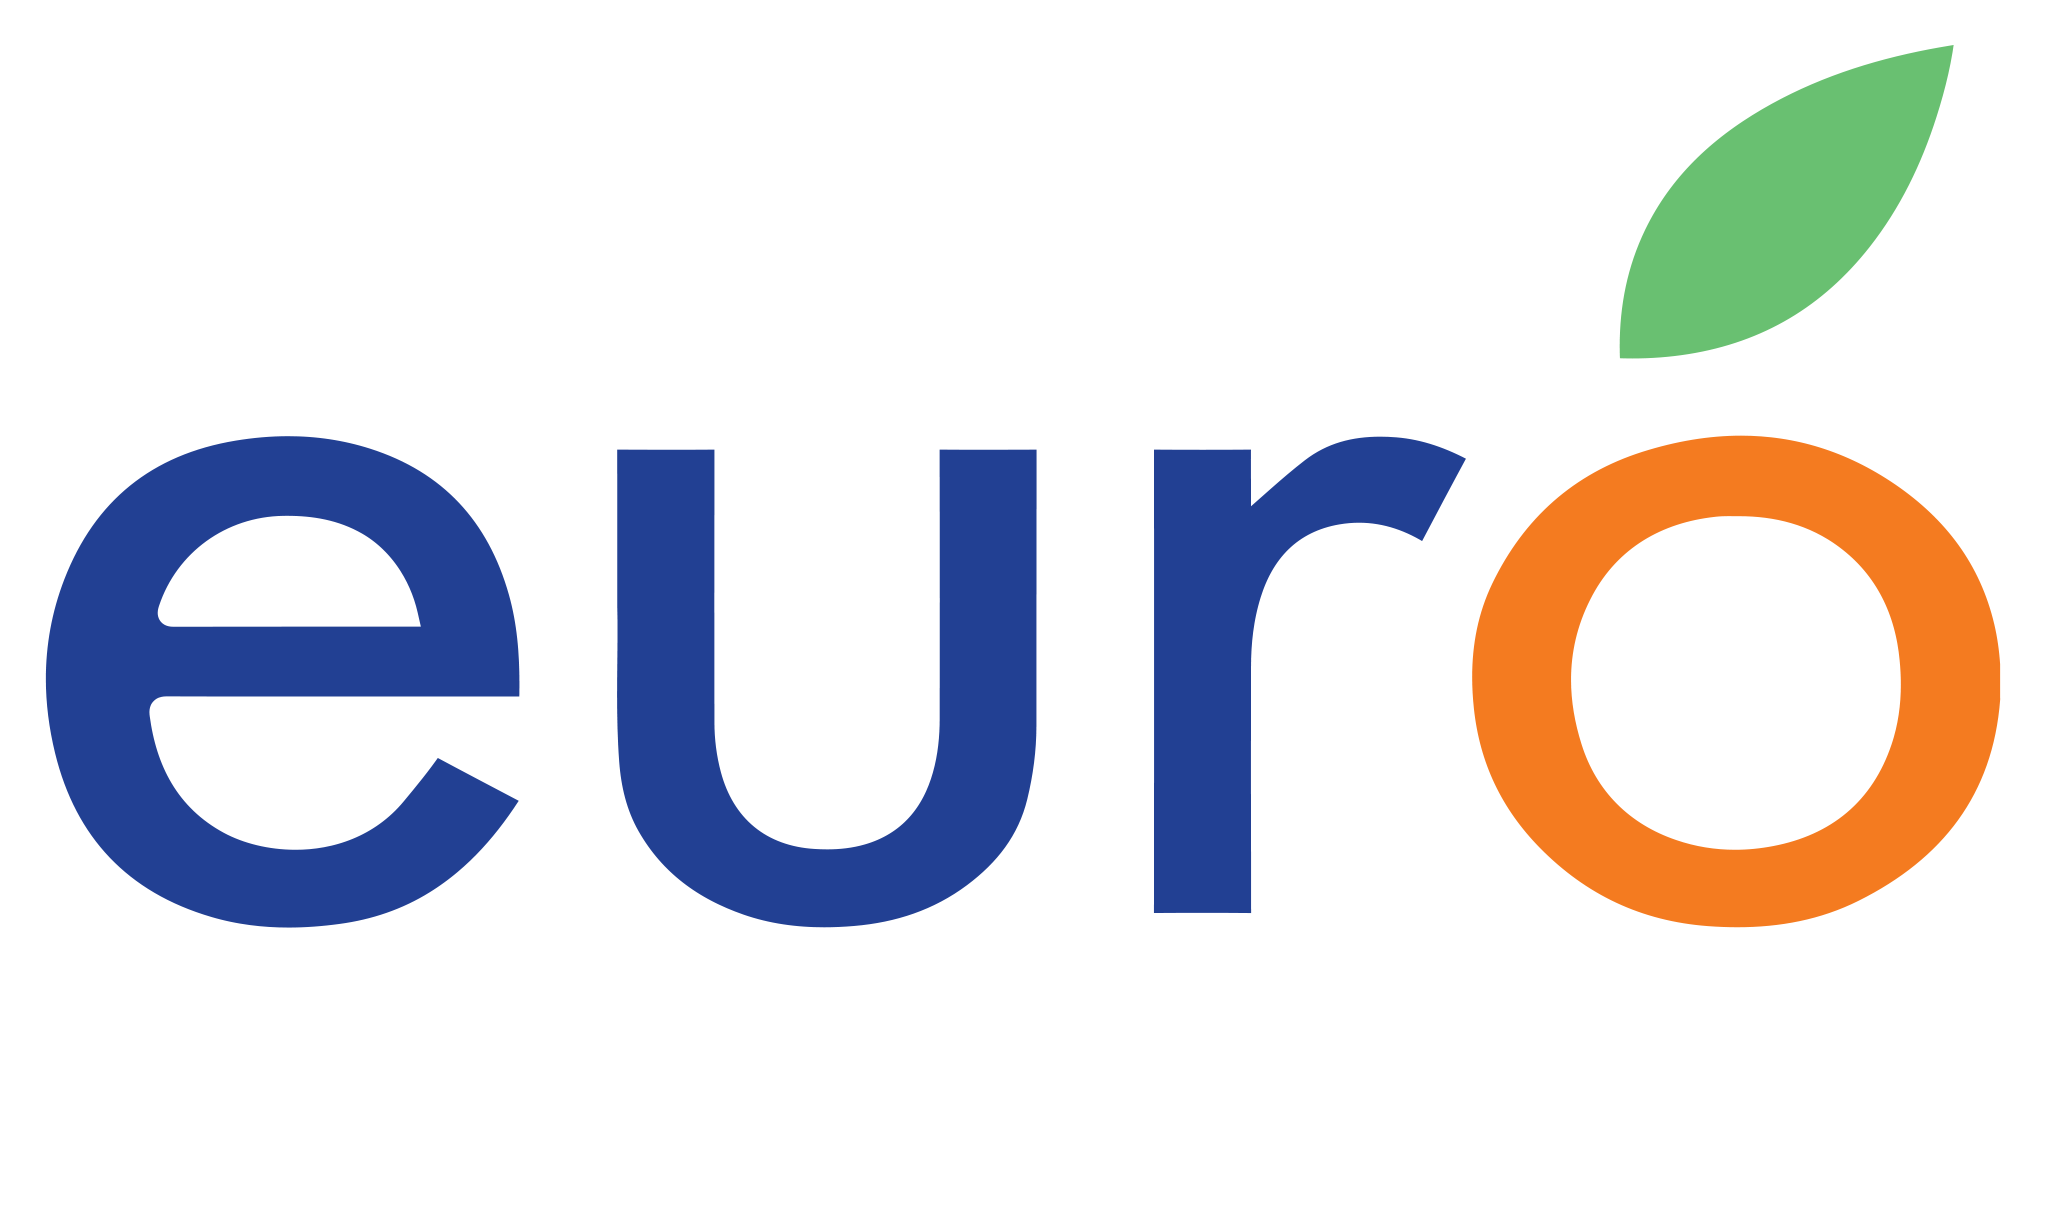 http://euromedfoods.com/wp-content/uploads/2019/10/logo.png